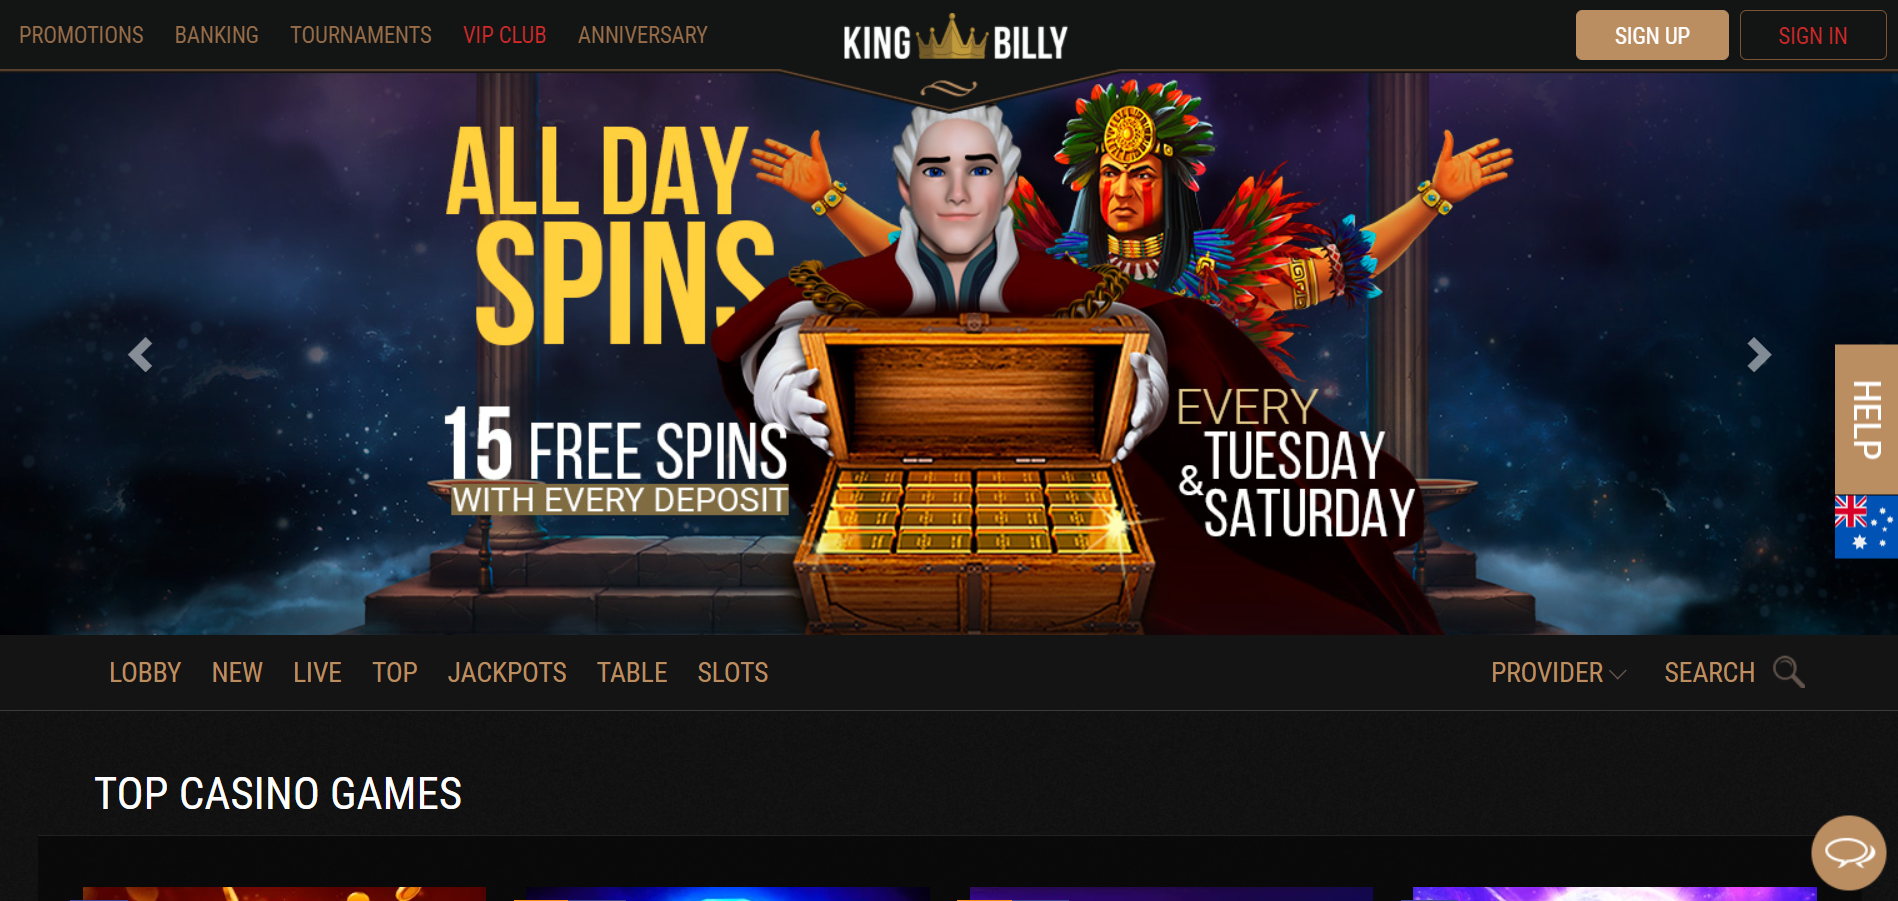 King-Billy-Casino